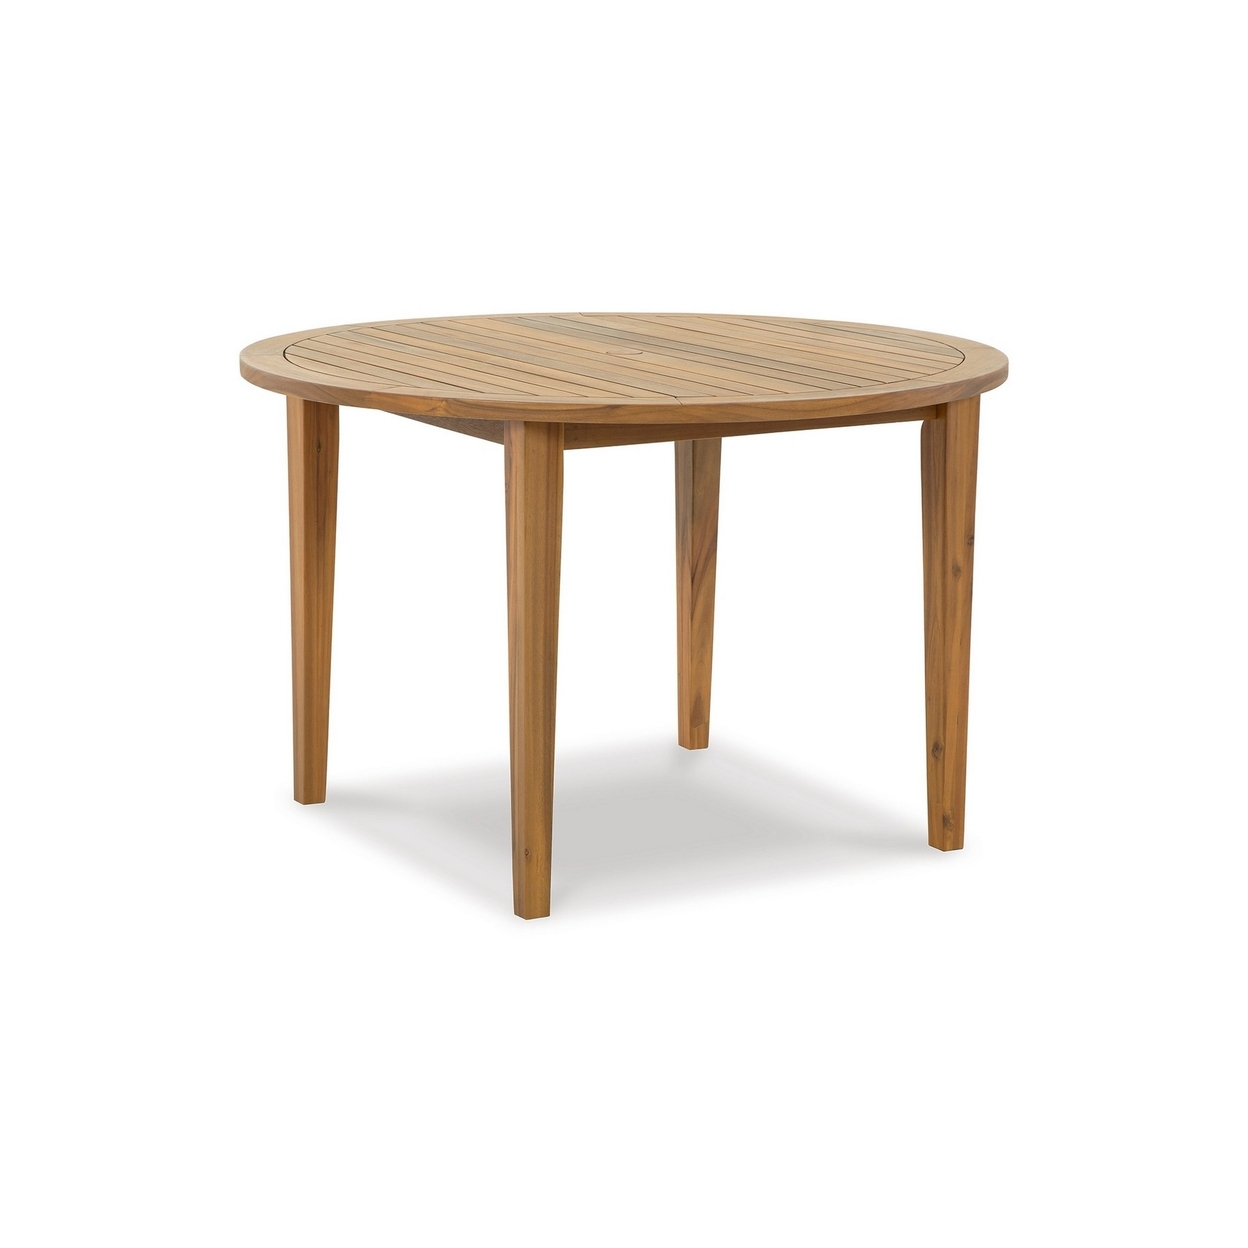 Ita 46 Inch Round Dining Table, Slatted Wood Tabletop, Brown Acacia Frame- Saltoro Sherpi